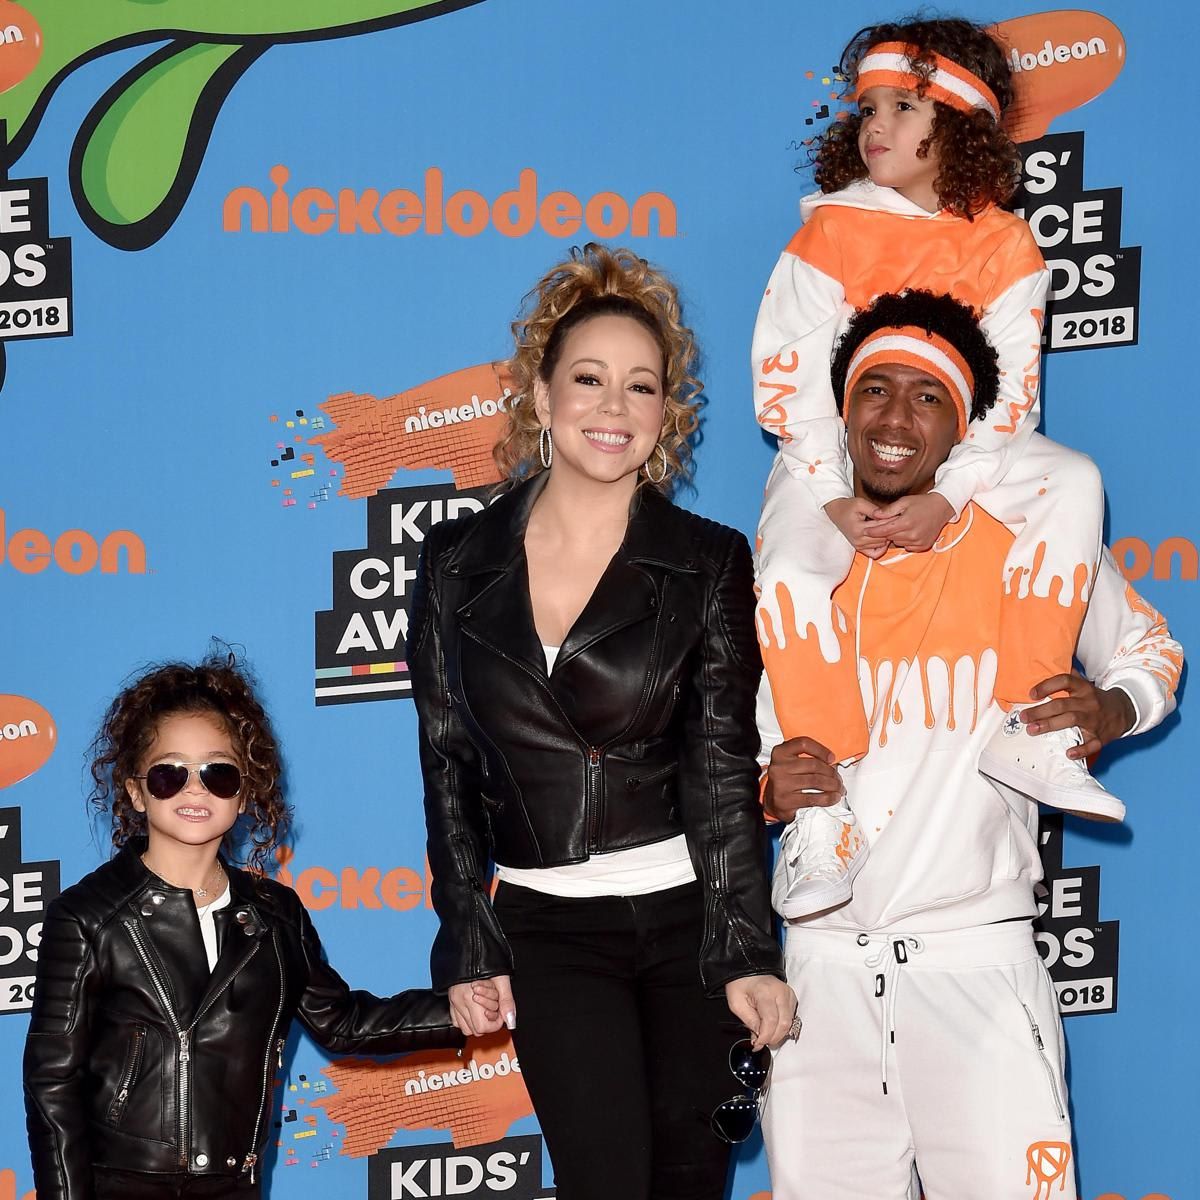 Nickelodeon's 2018 Kids' Choice Awards